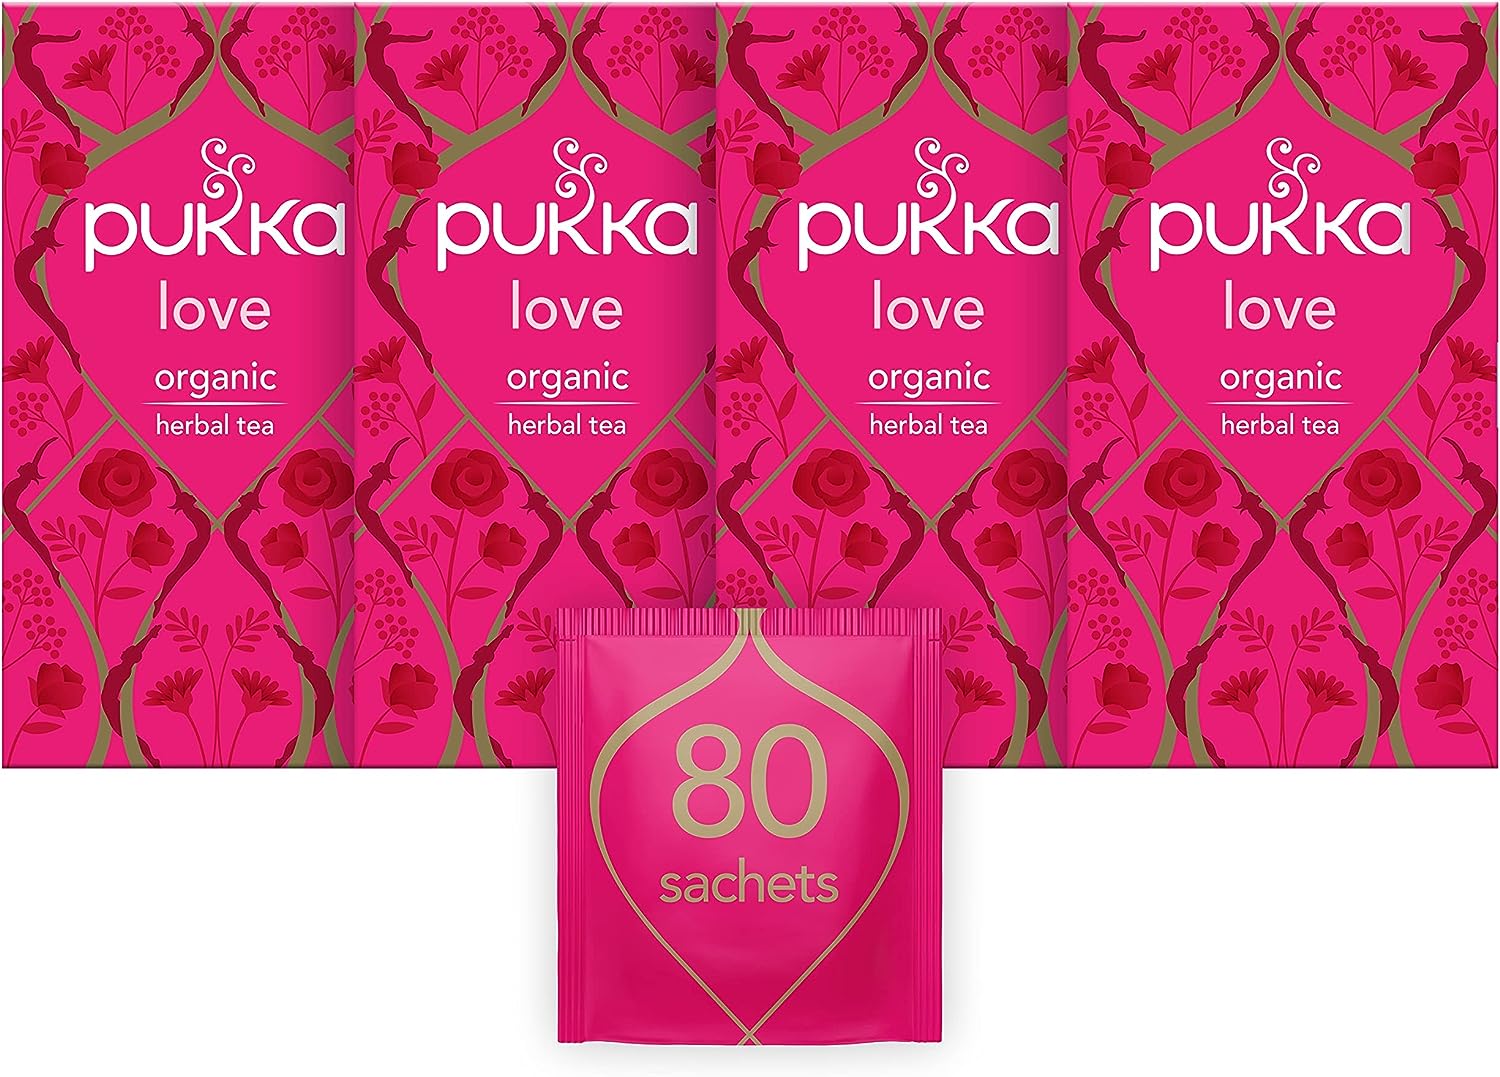 Pukka Tea Love Envelopes 20's - NWT FM SOLUTIONS - YOUR CATERING WHOLESALER